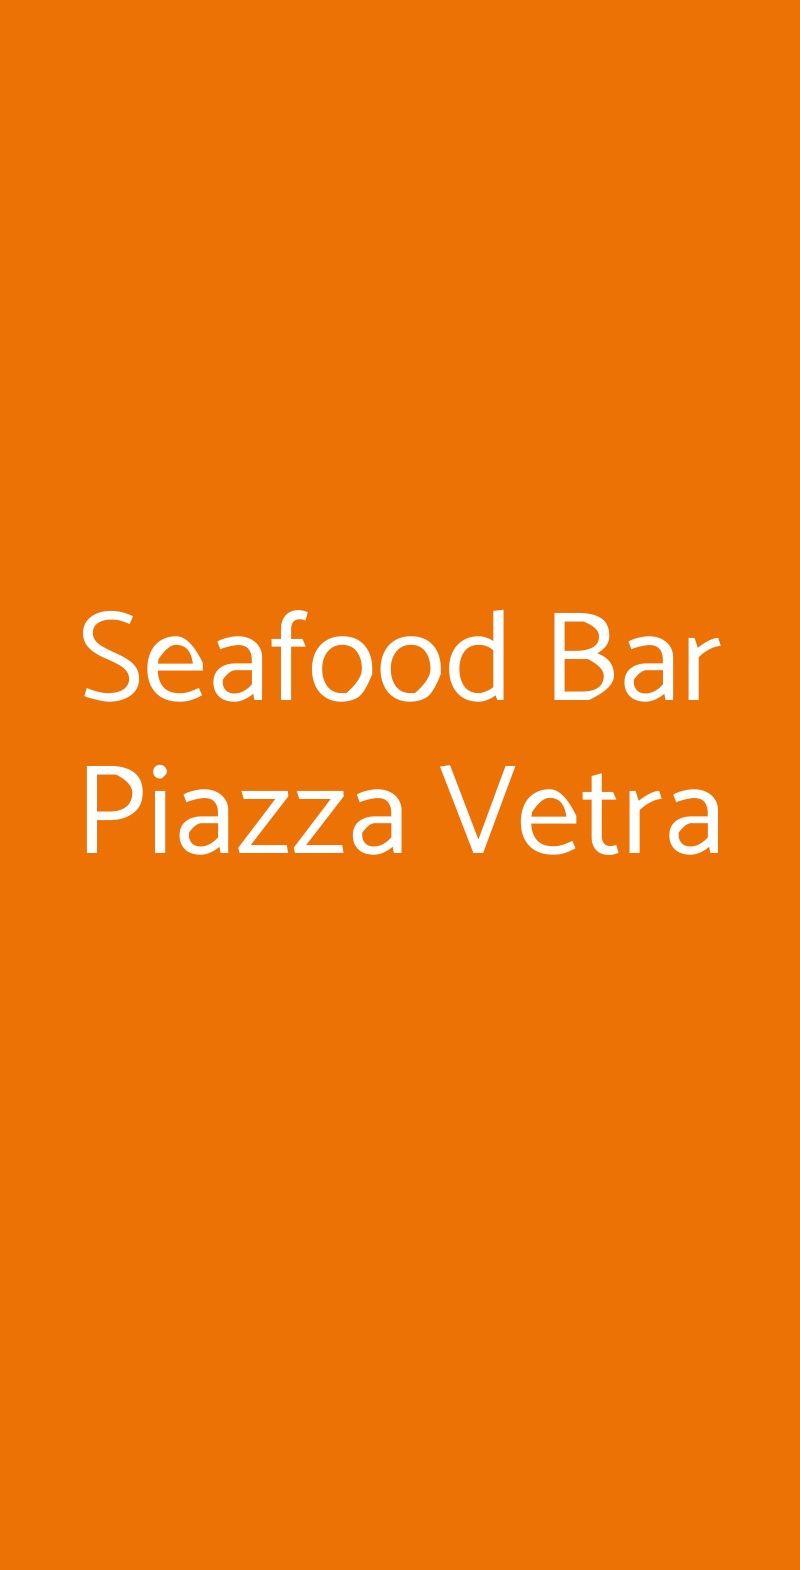 Seafood Bar Piazza Vetra Milano menù 1 pagina